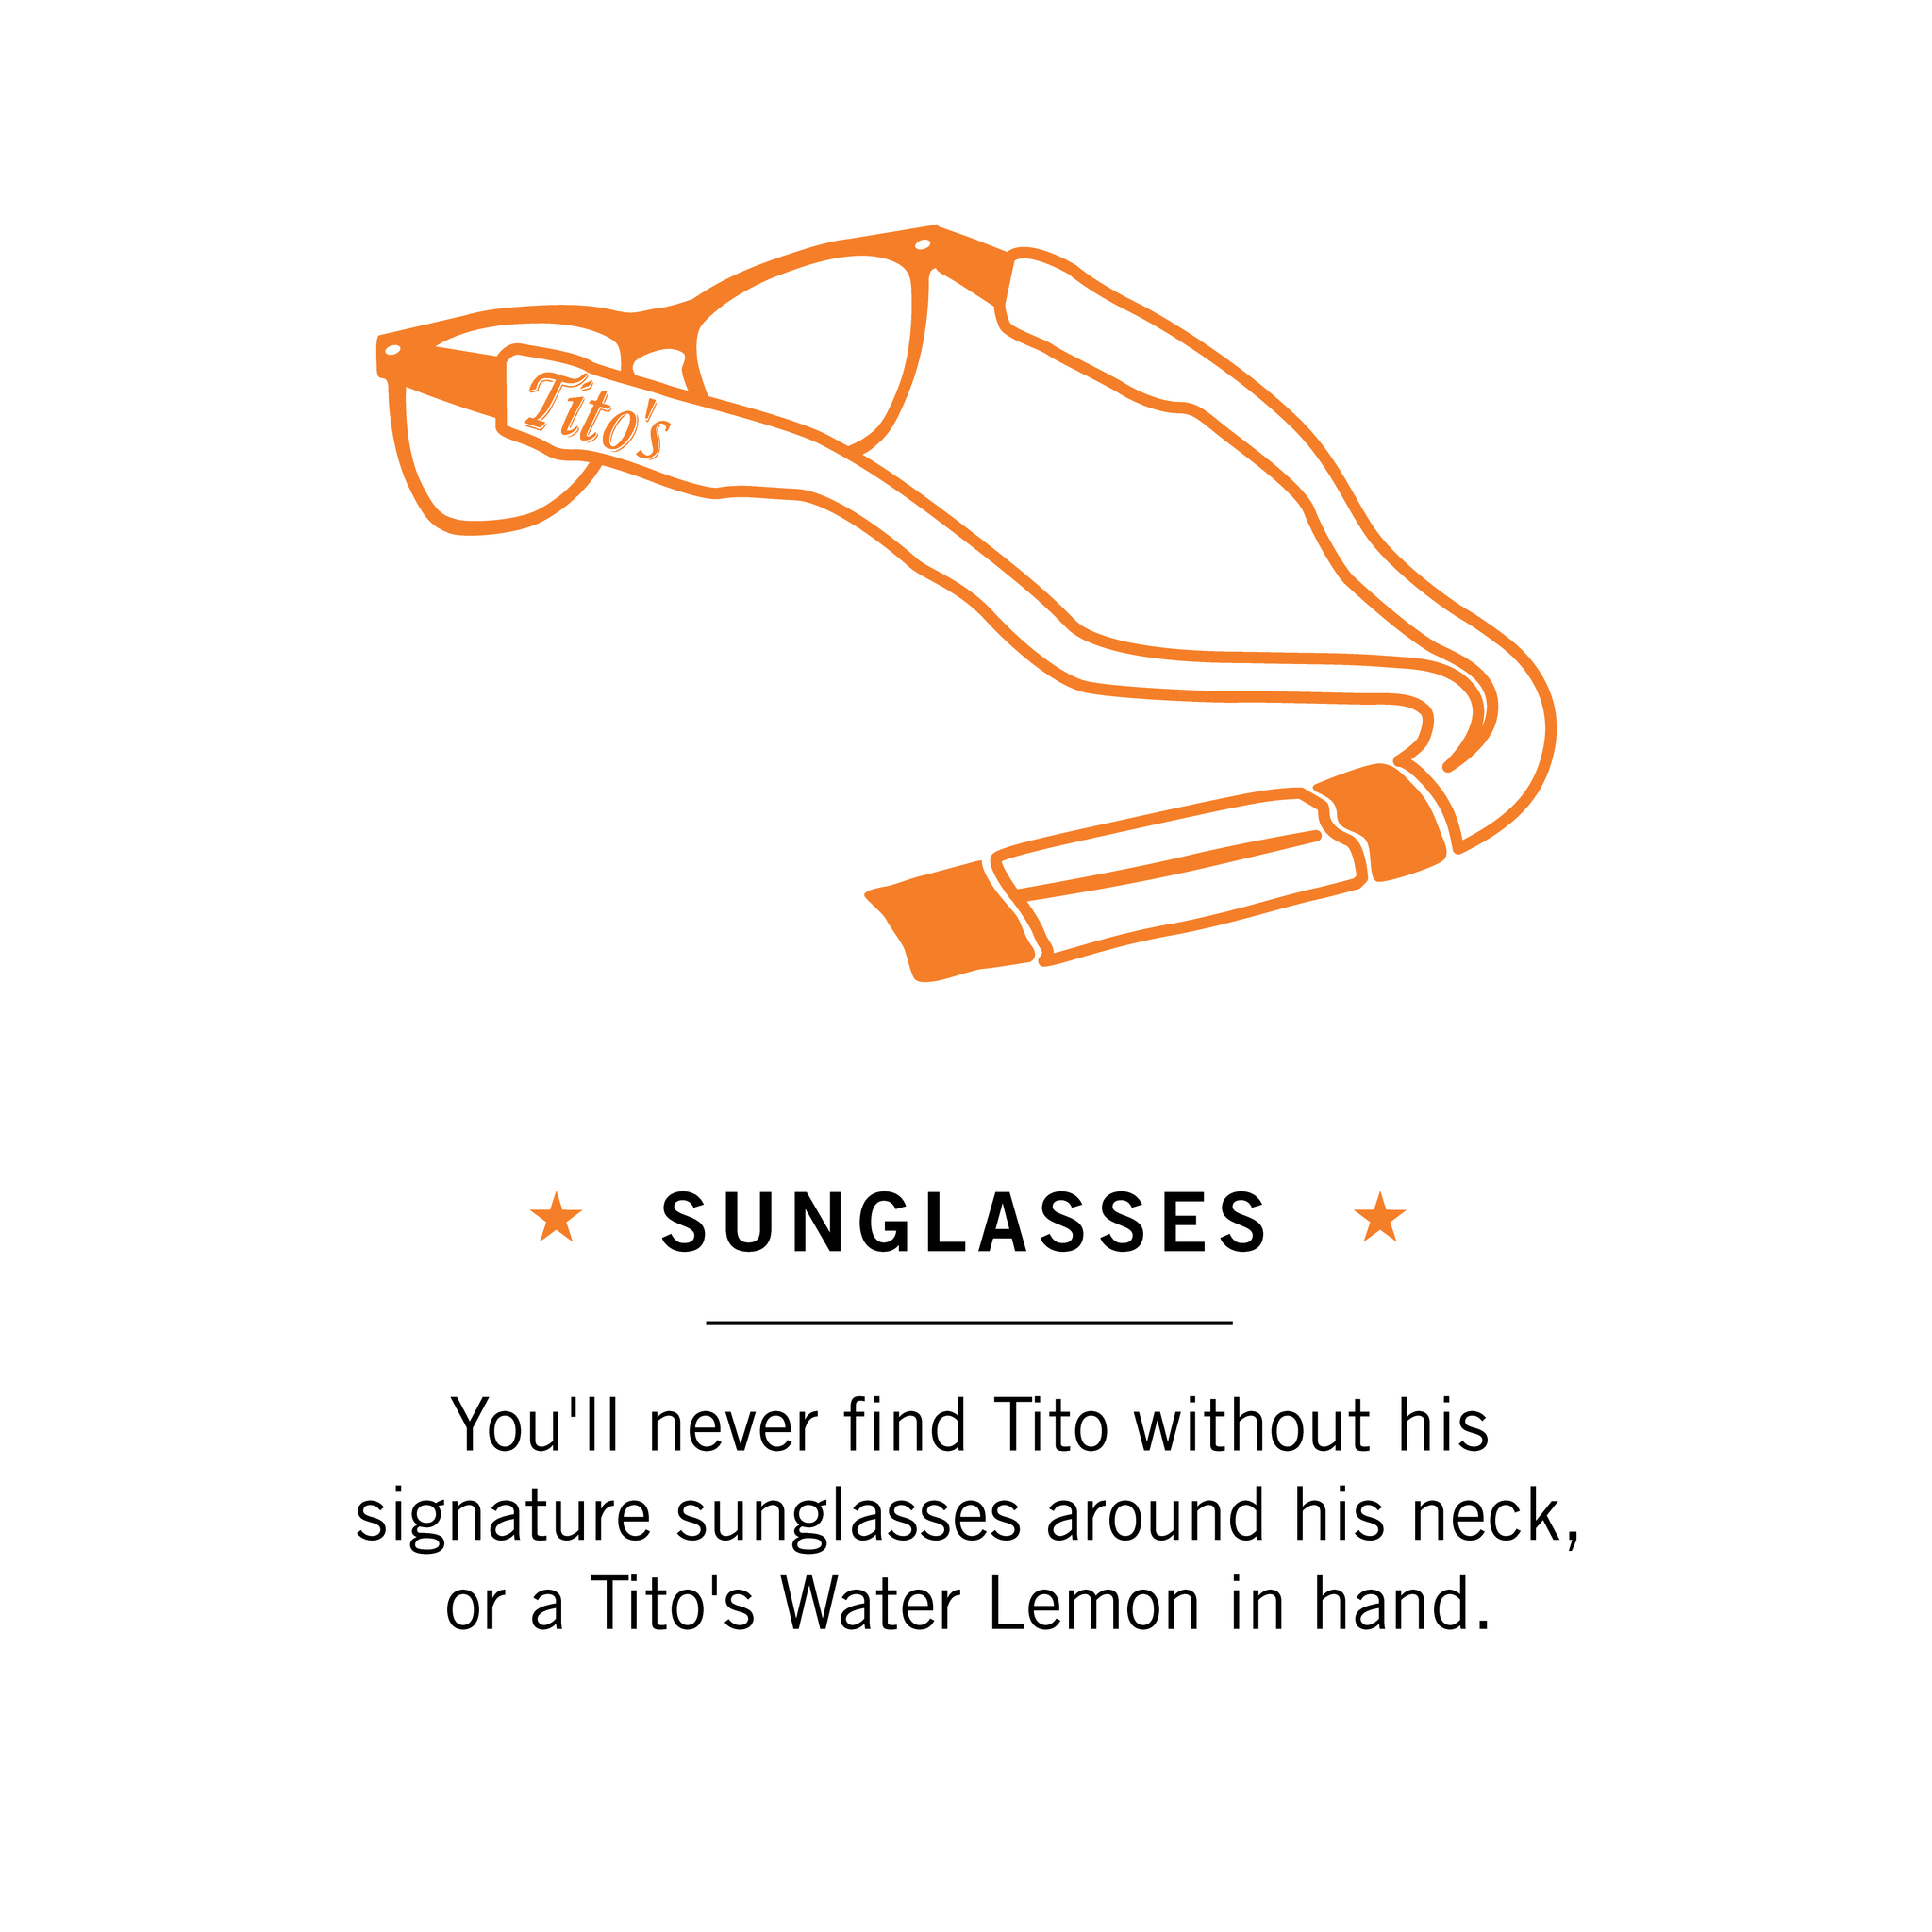 Sunglasses illustration